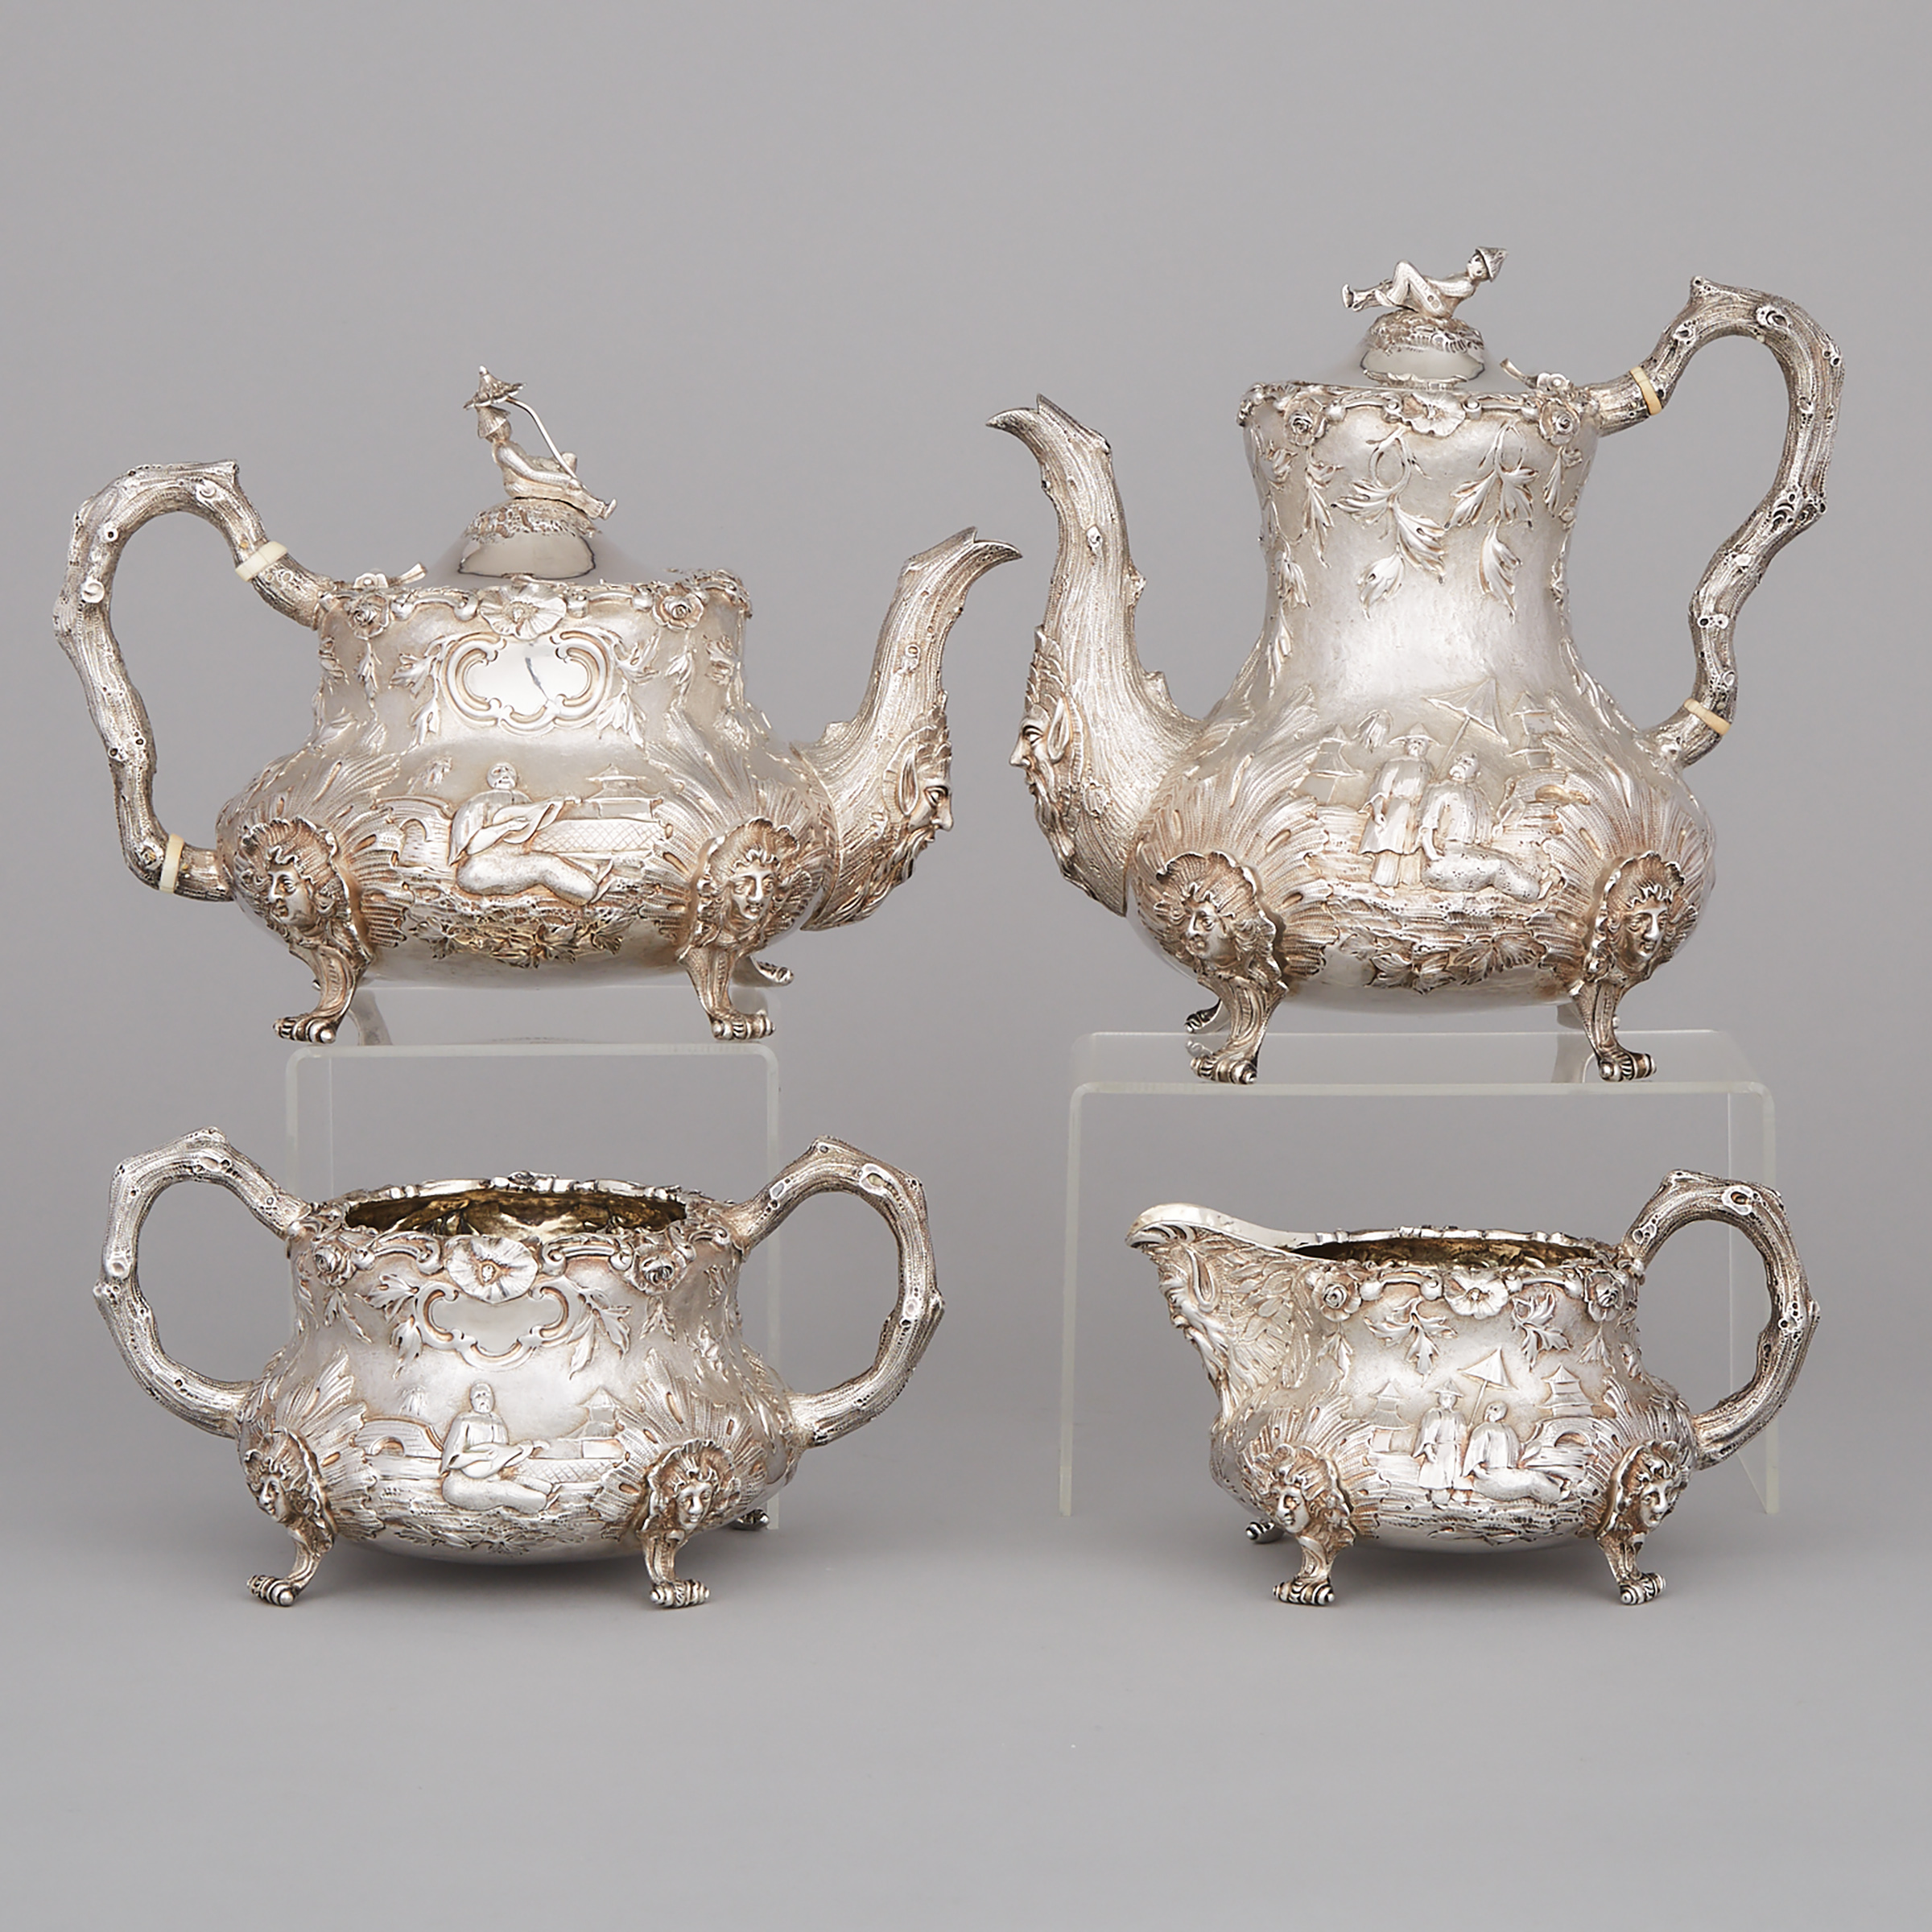 Victorian Silver Chinoiserie Tea and Coffee Service, William Ker Reid, London, 1847